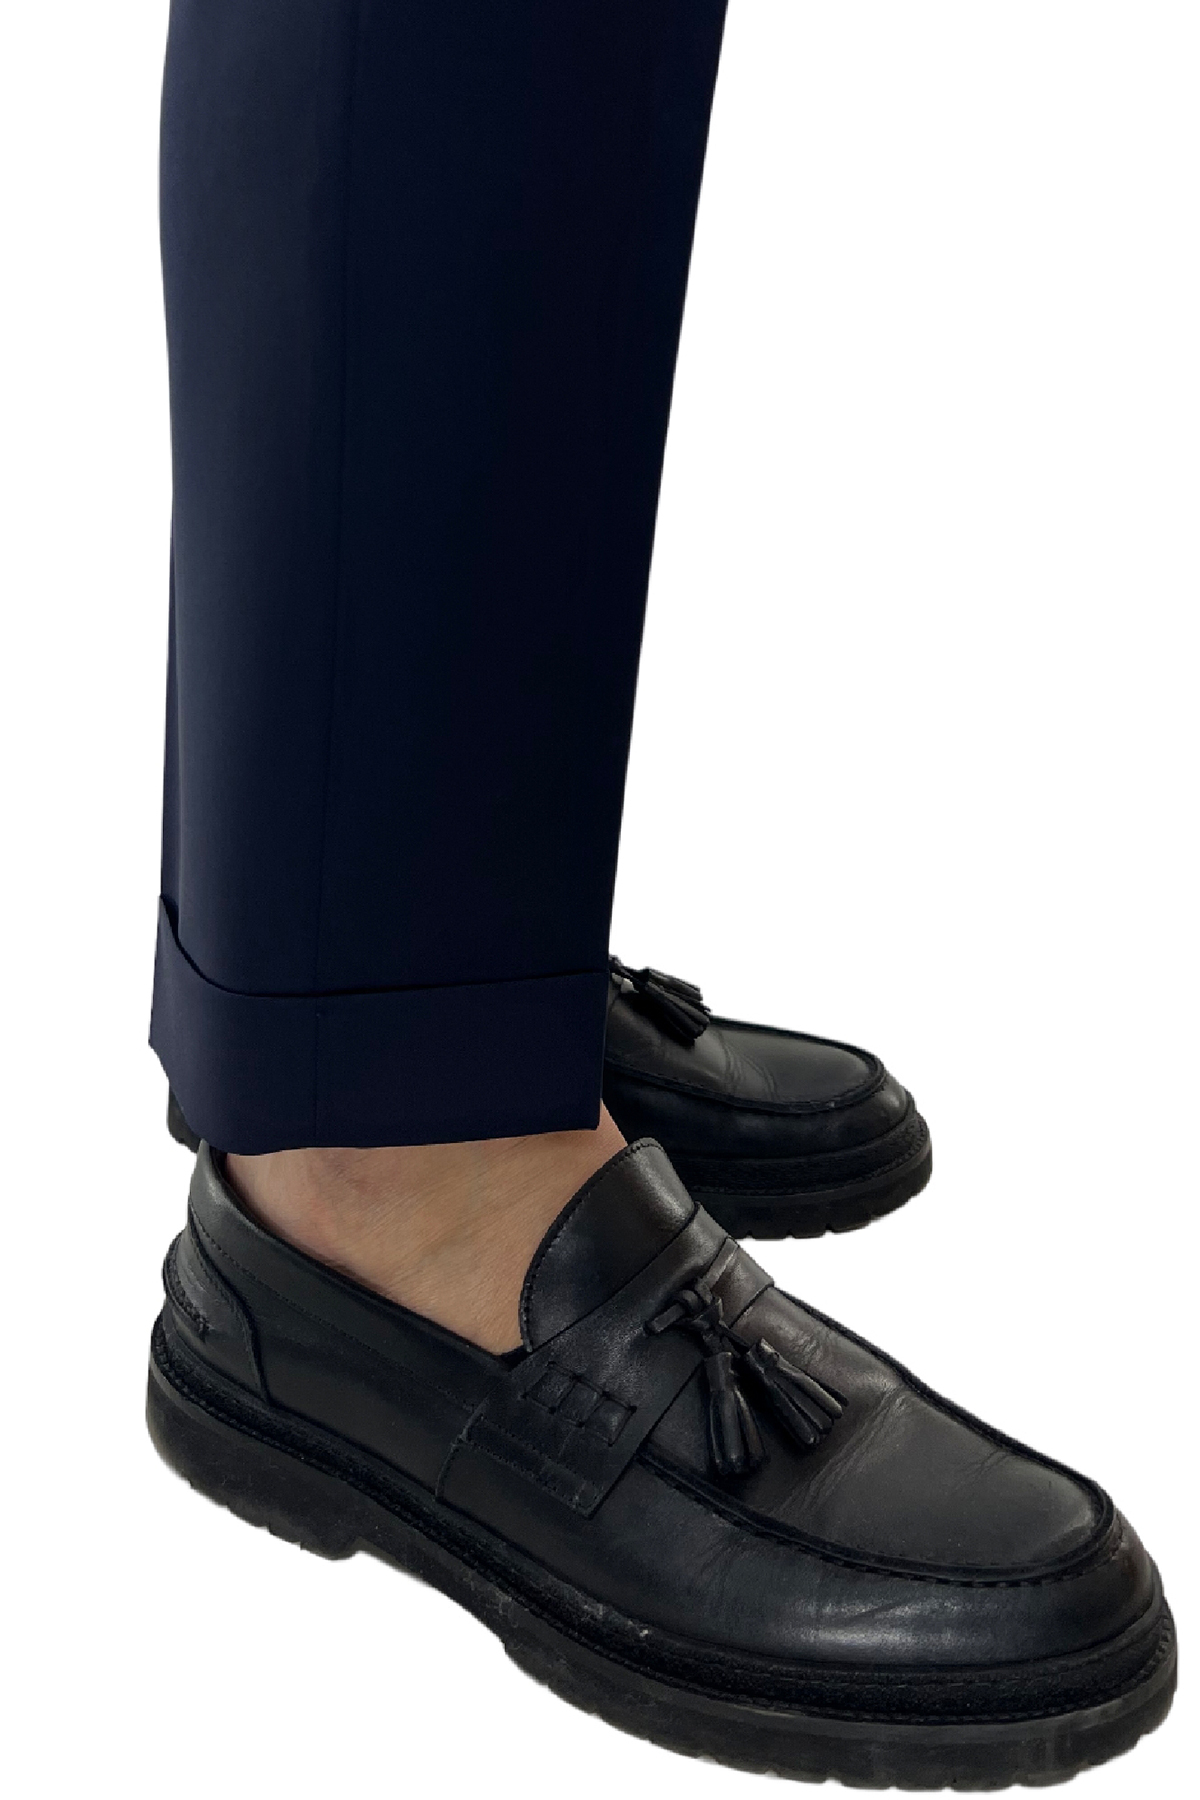 Pantalone uomo Blu Navy vita alta tasca america in fresco lana 100% Vitale Barberis Canonico fibbie laterali e risvolto 4cm